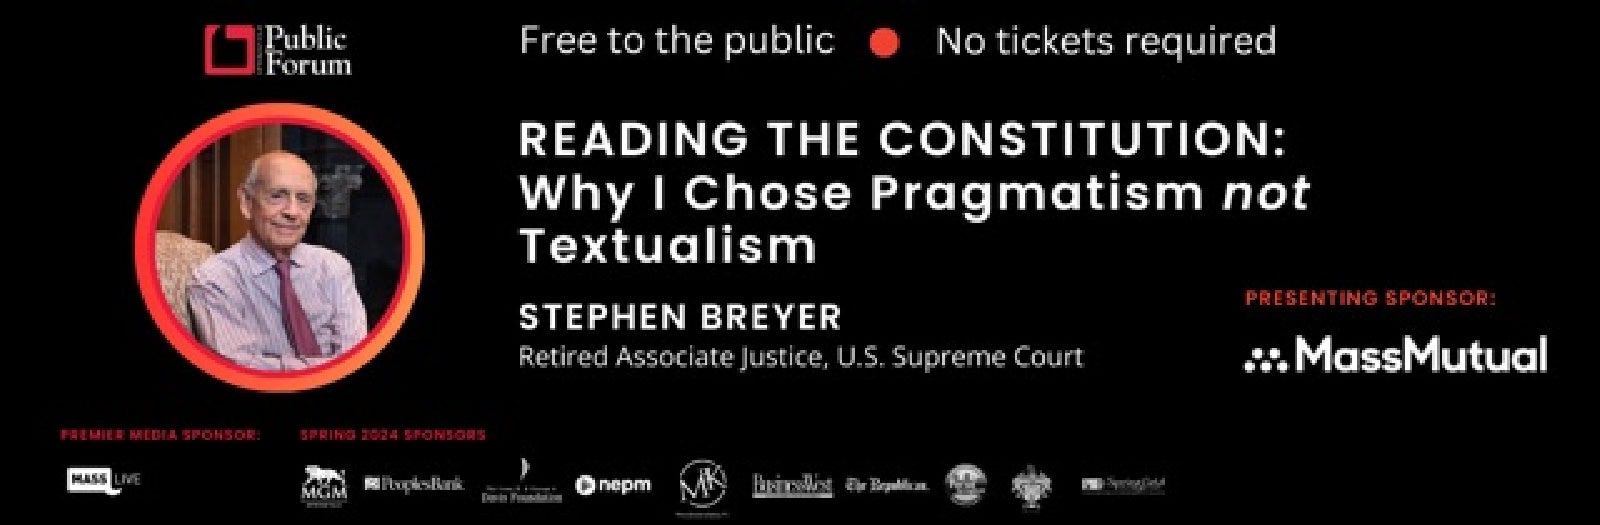 Free Springfield Public Forum - Stephen Breyer, Retired Associate Justice, U.S. Supreme Court